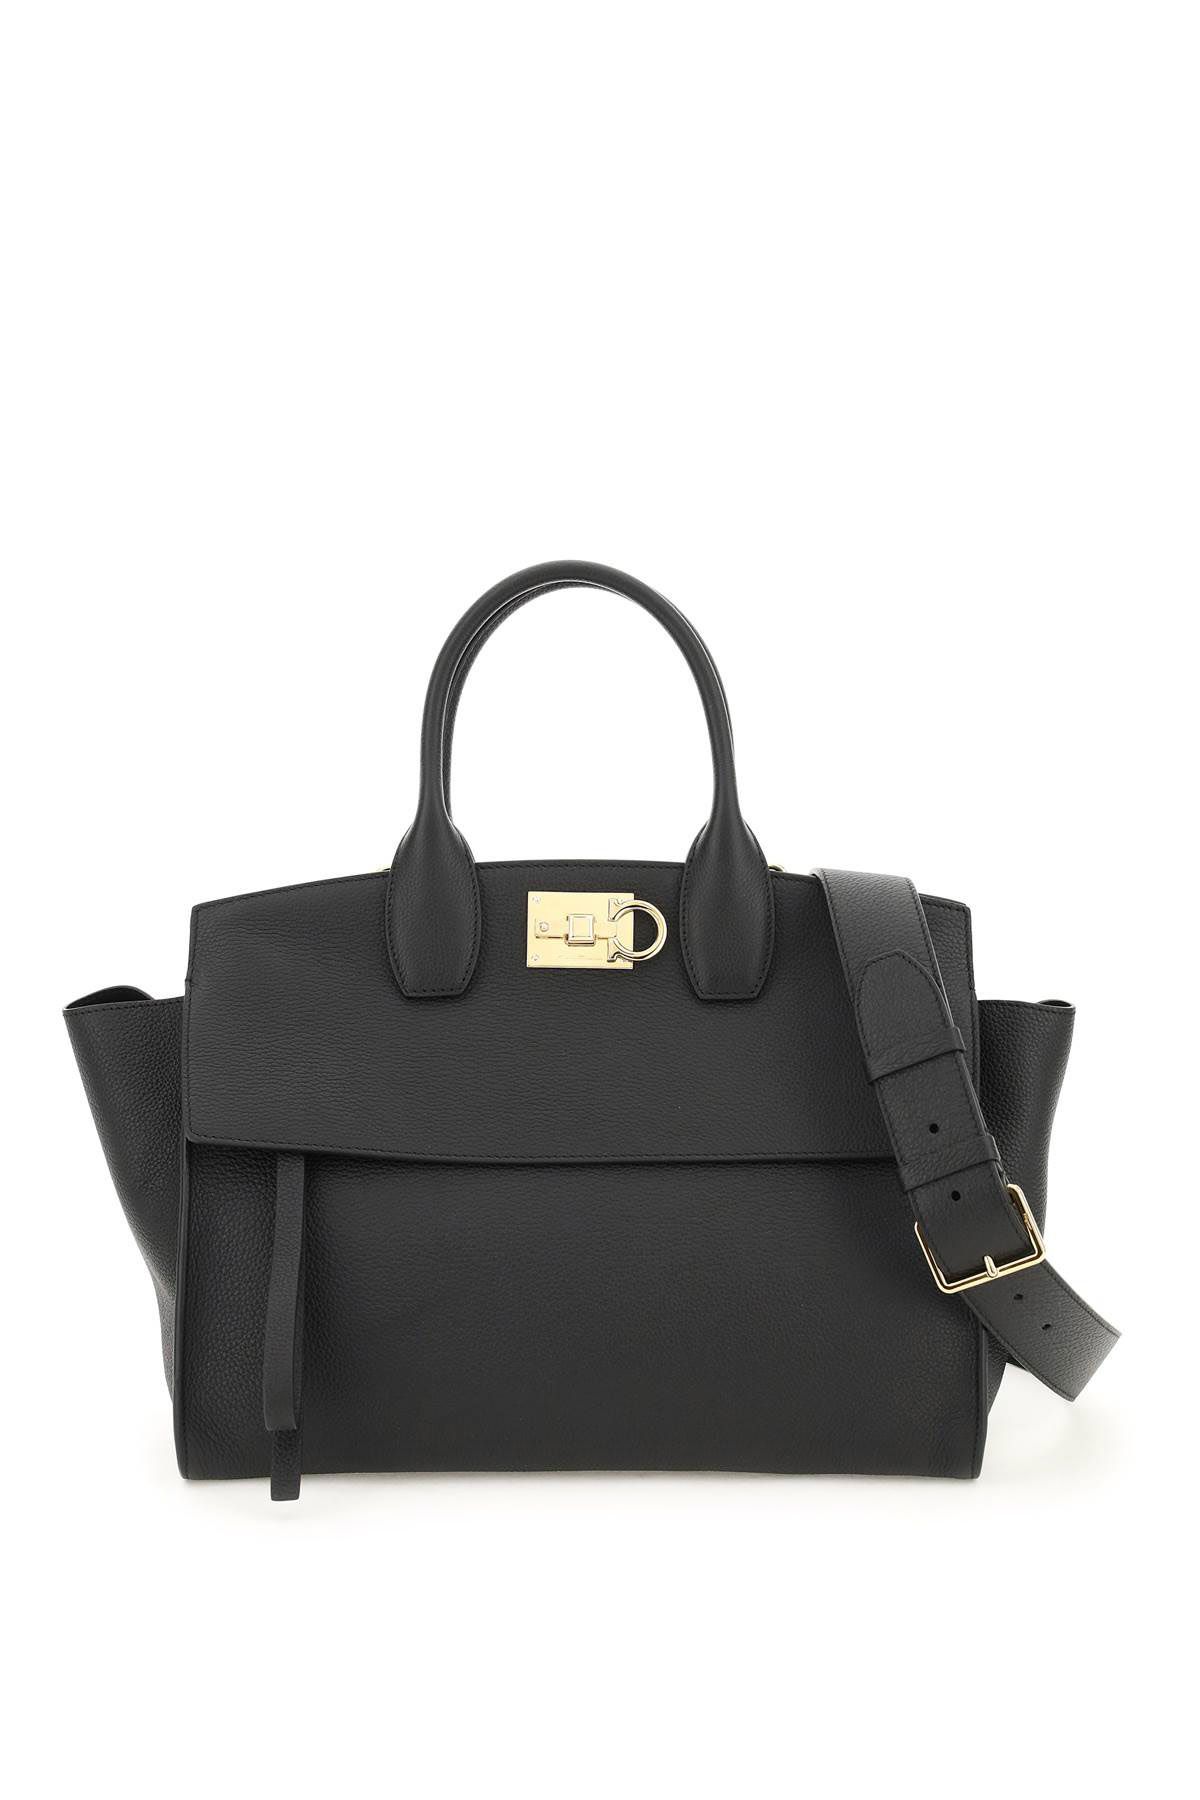 Ferragamo Grained Leather Studio Bag In Black